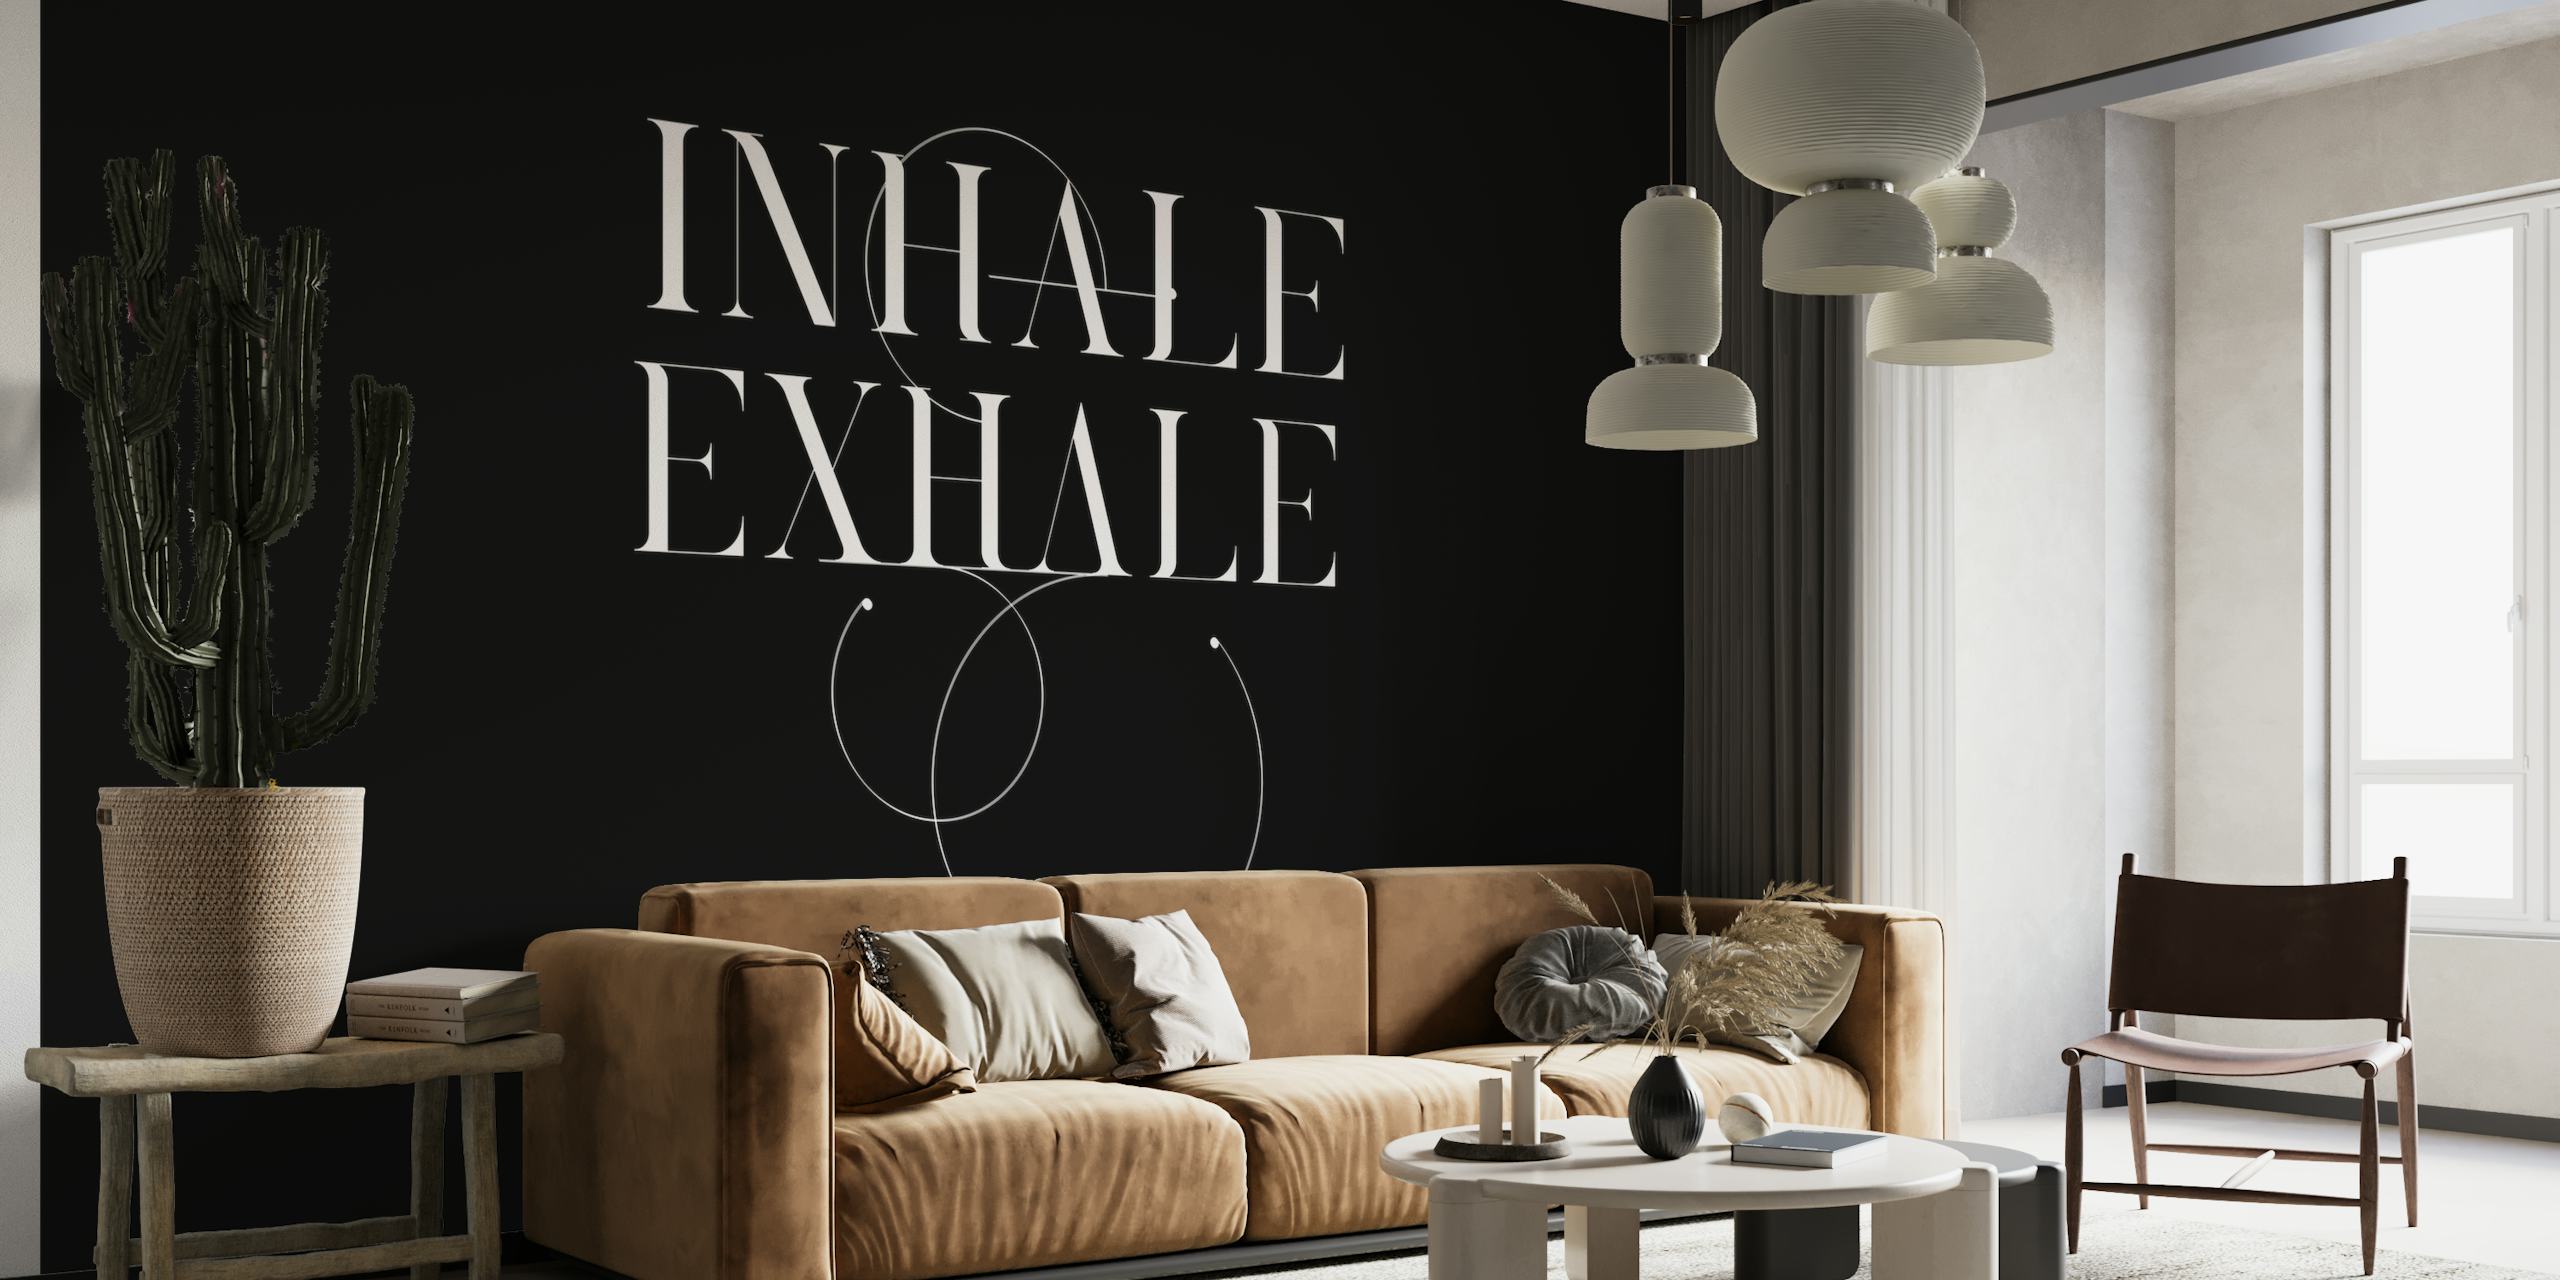 Inhale Exhale Relax Black wallpaper